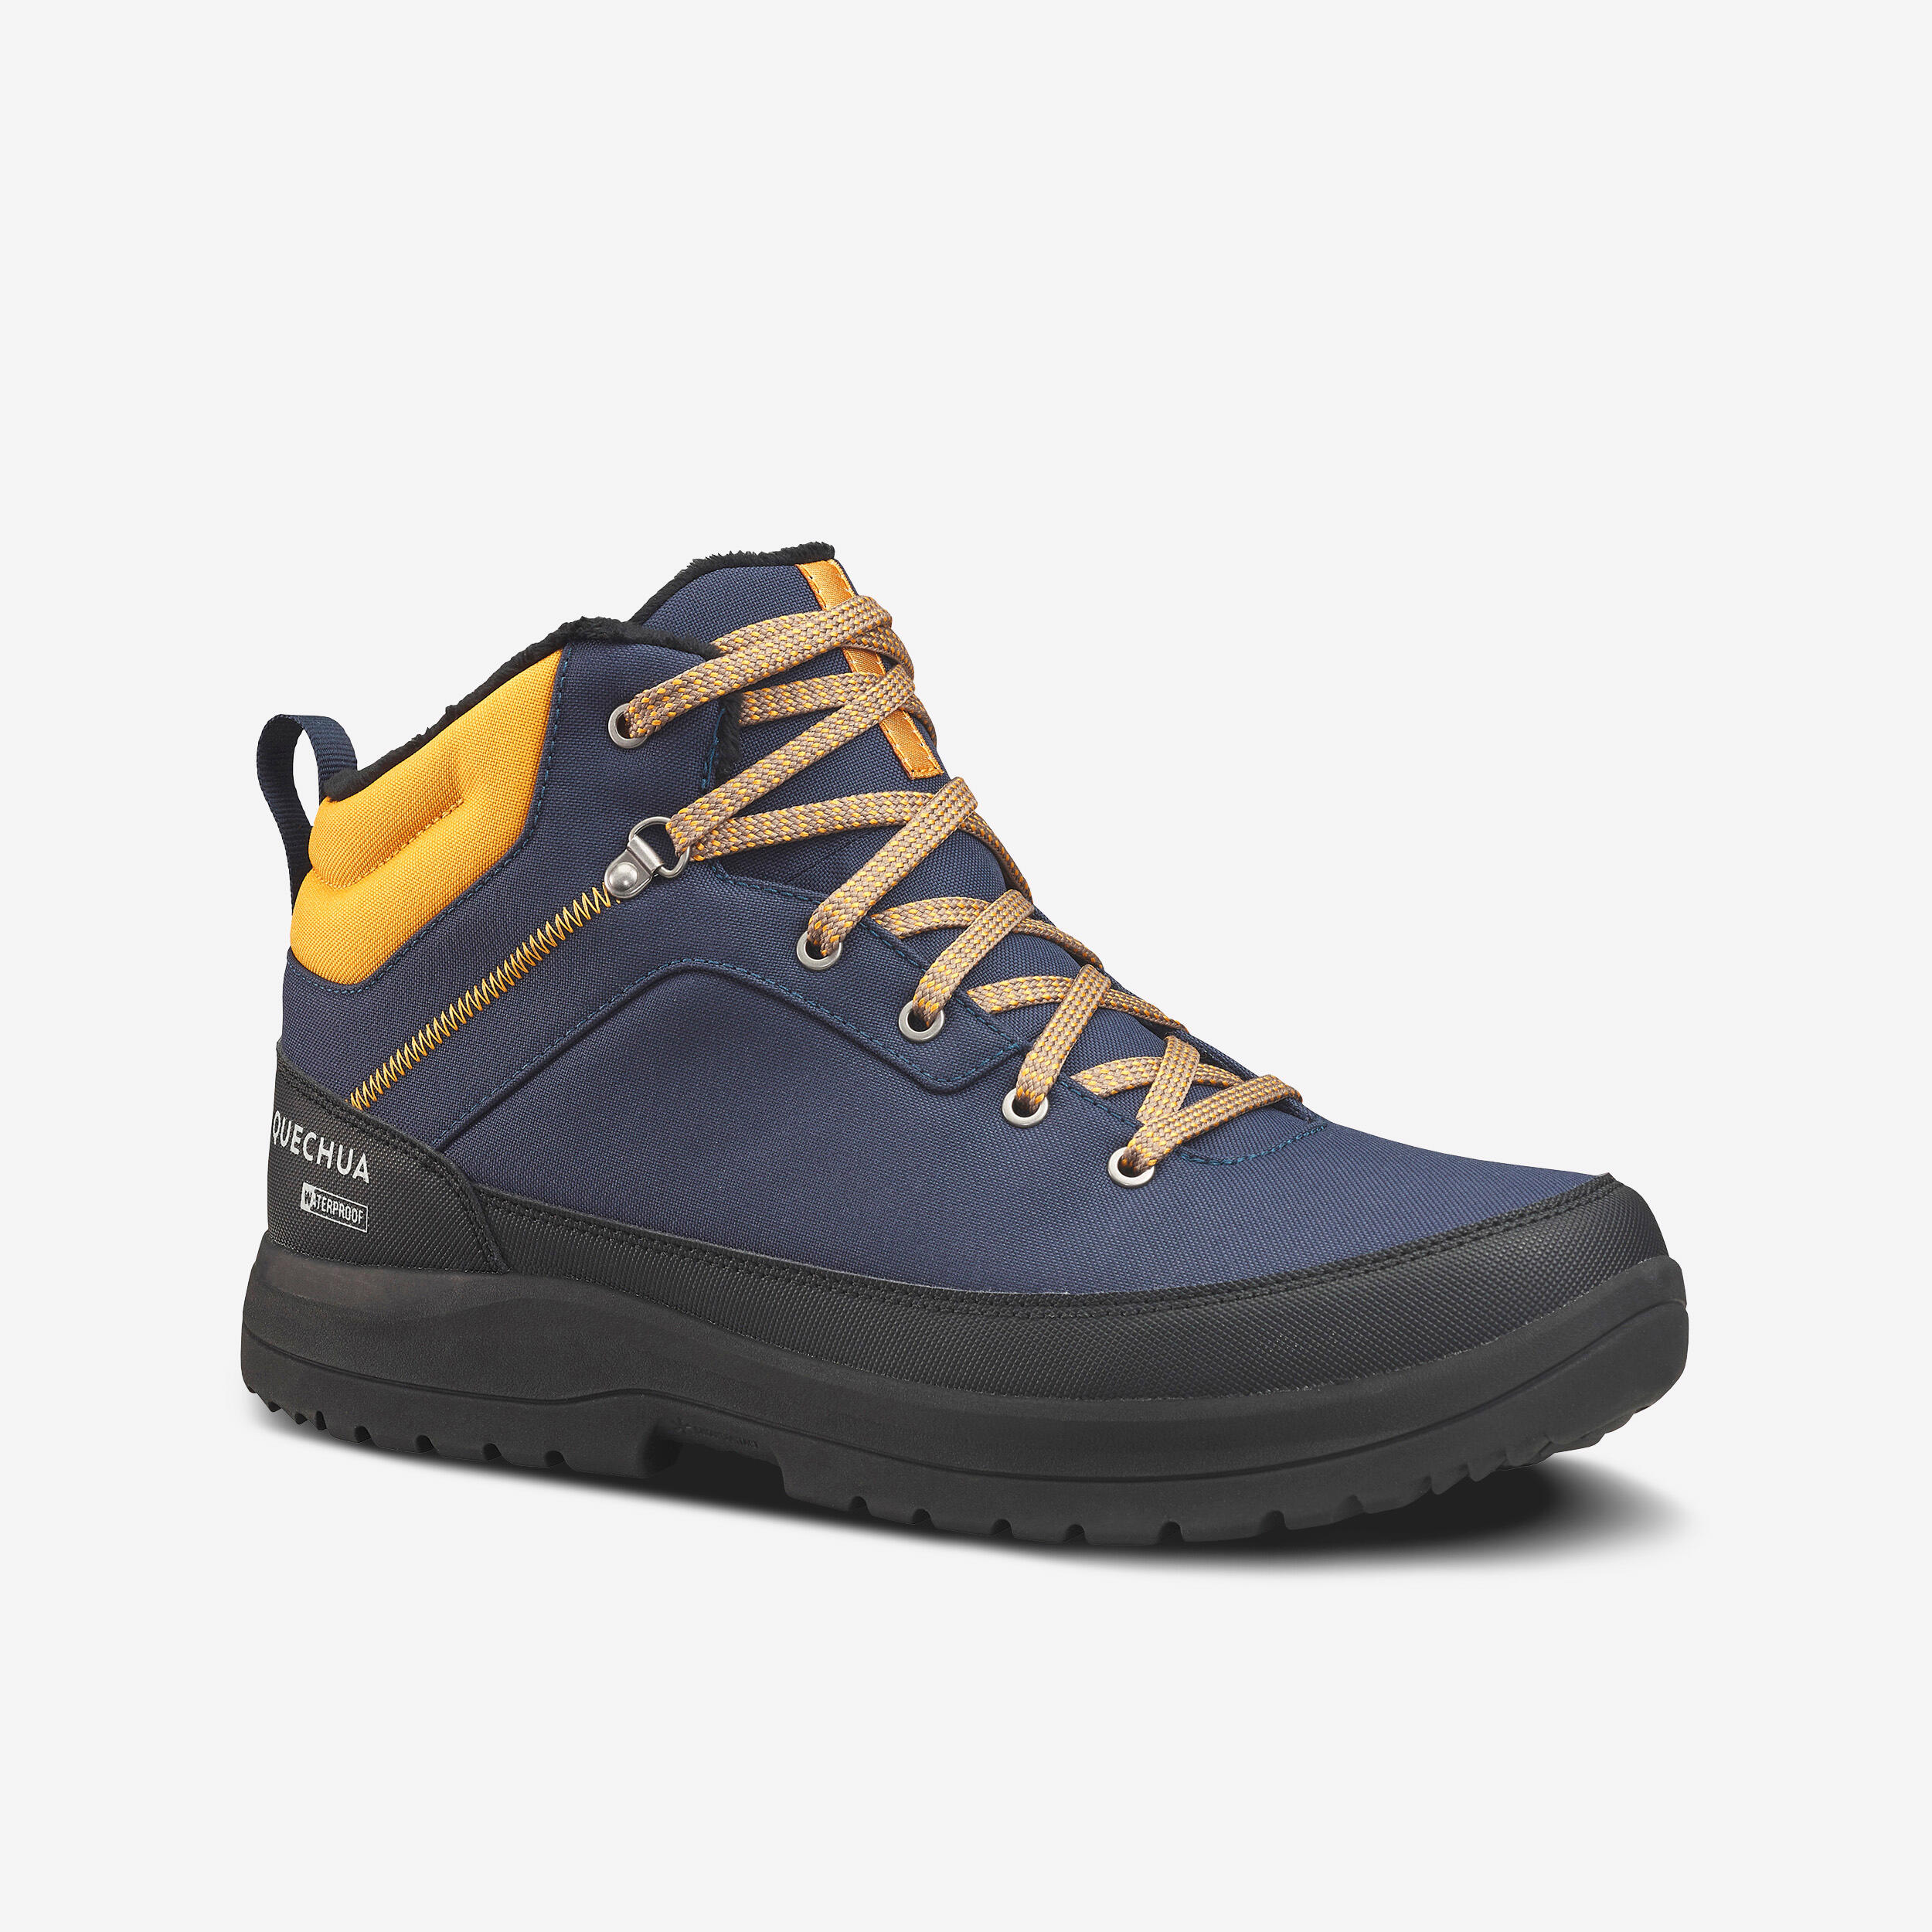 Men's Winter Boots - SH 500 Blue - Dark blue, Inkpot blue, Vermilion -  Quechua - Decathlon